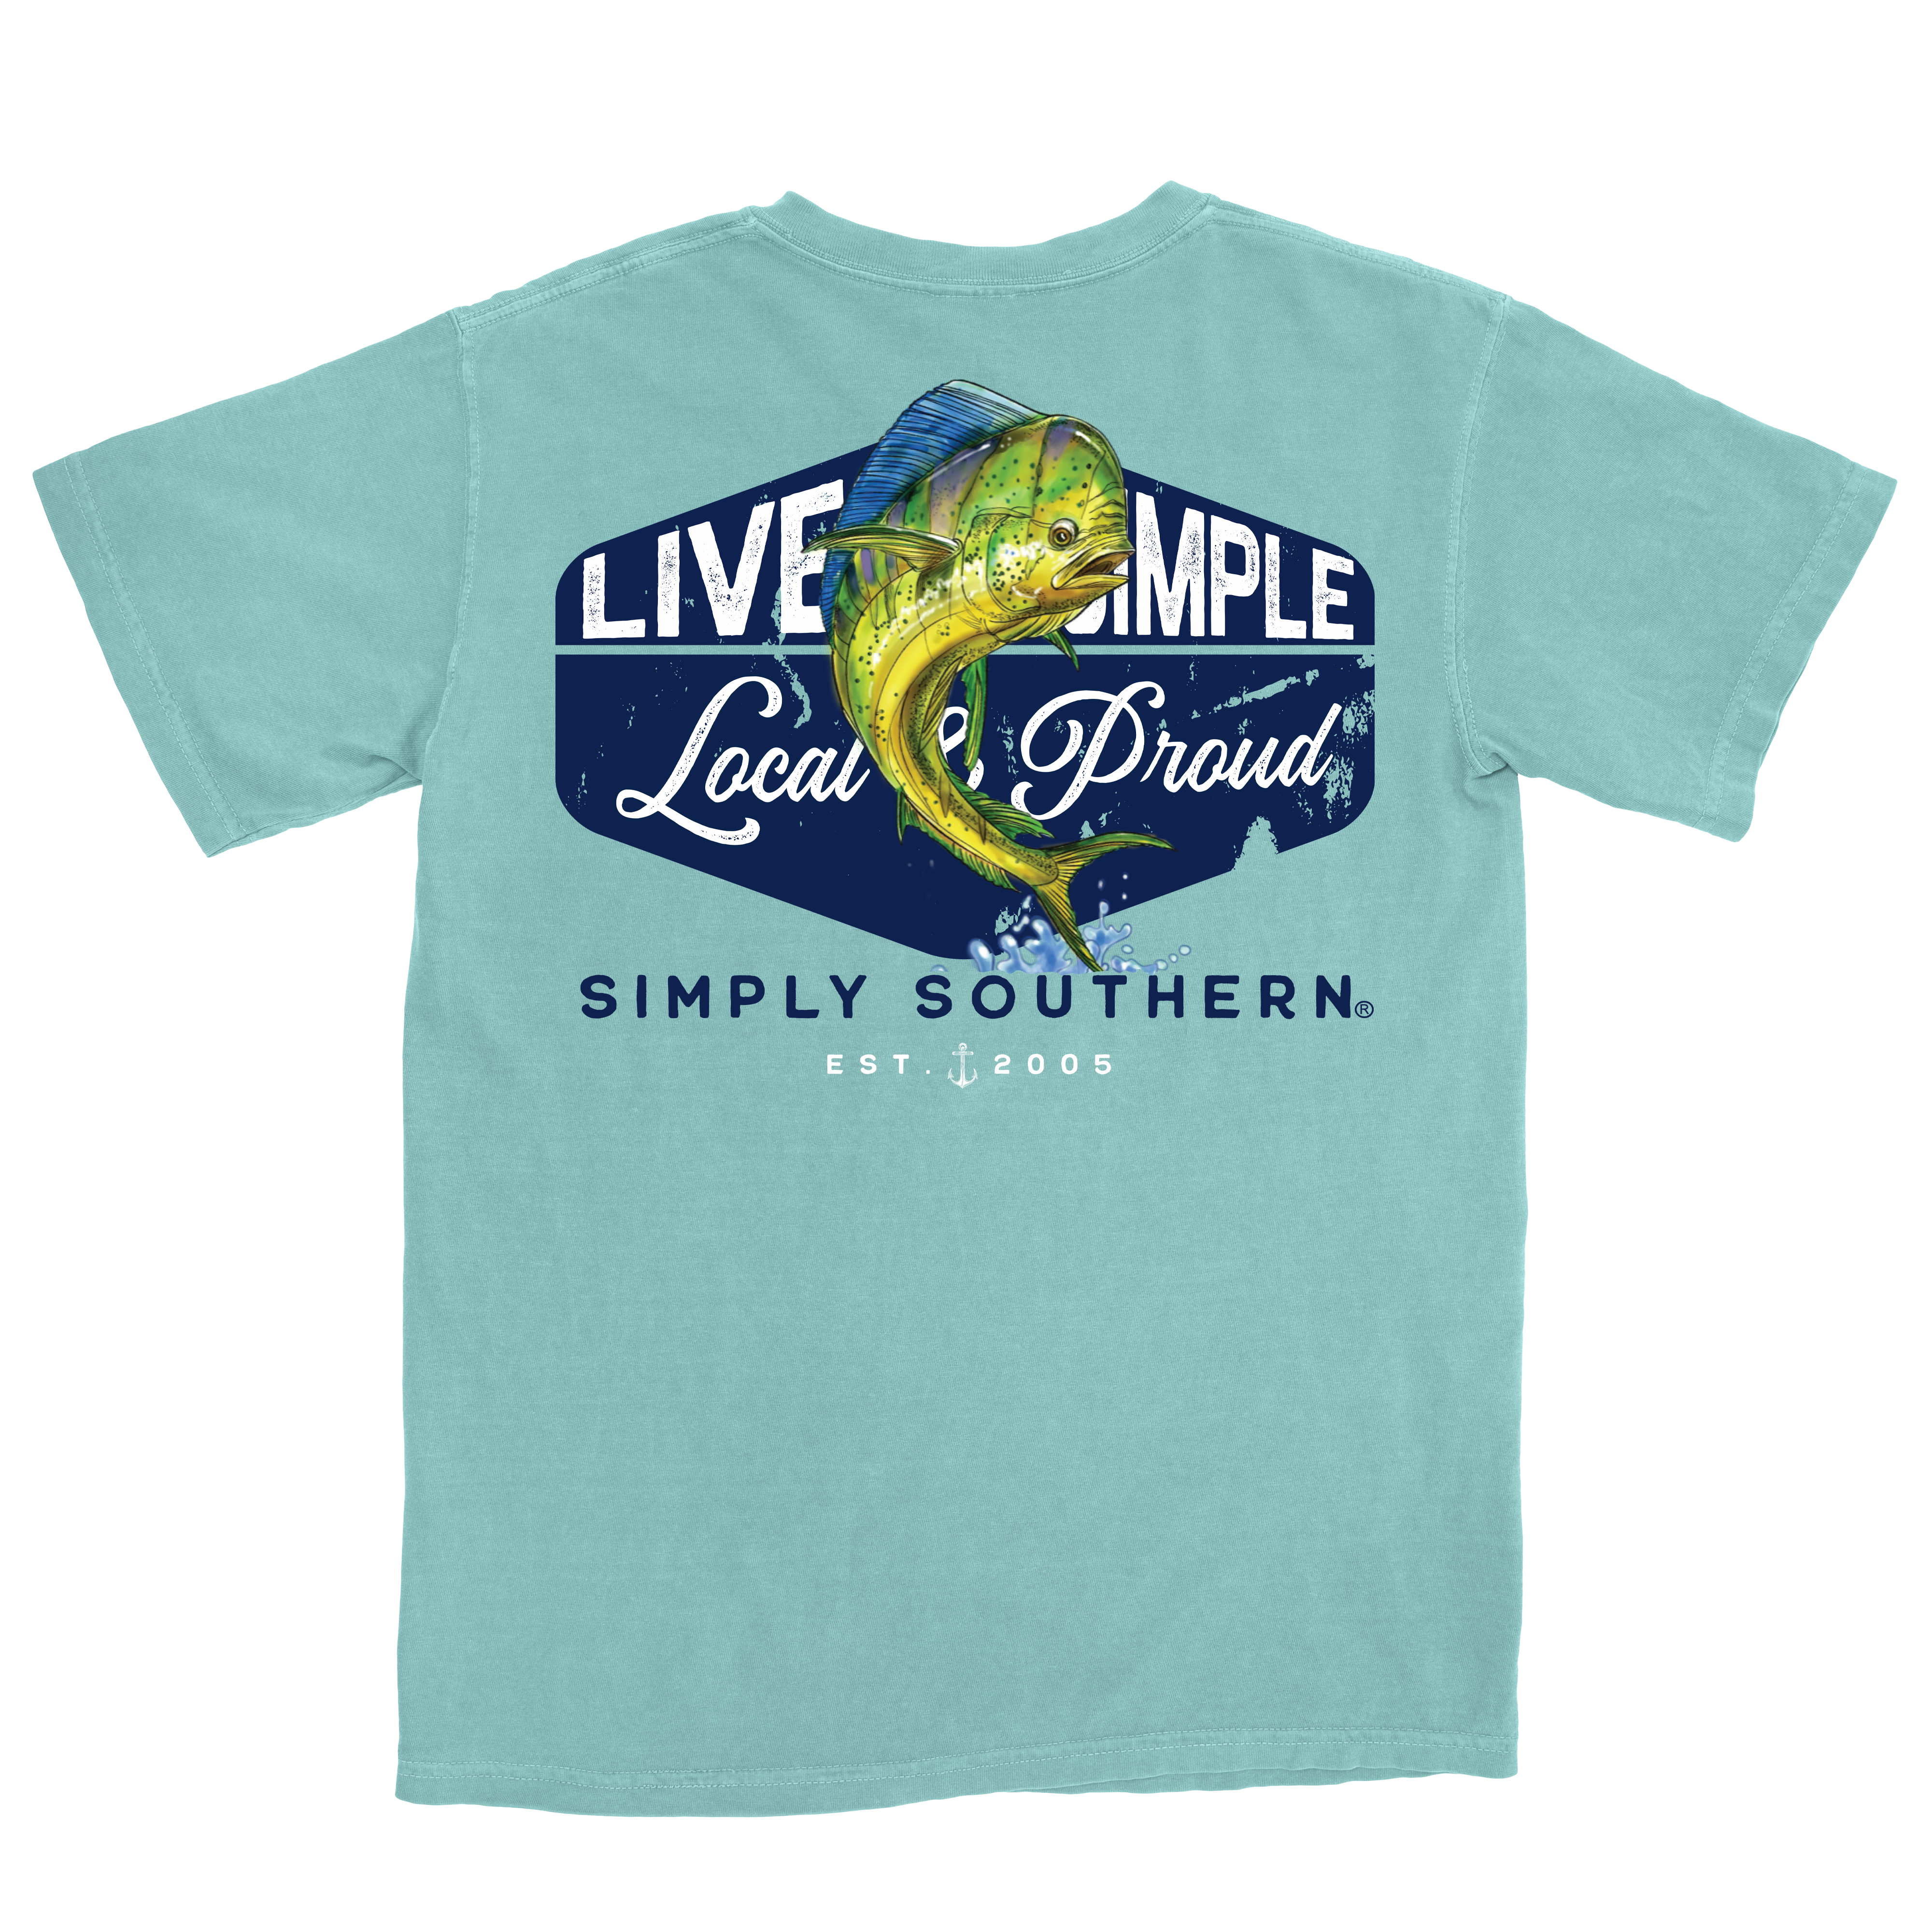 'Live Simple' Mahi Short Sleeve Tee by Simply Southern